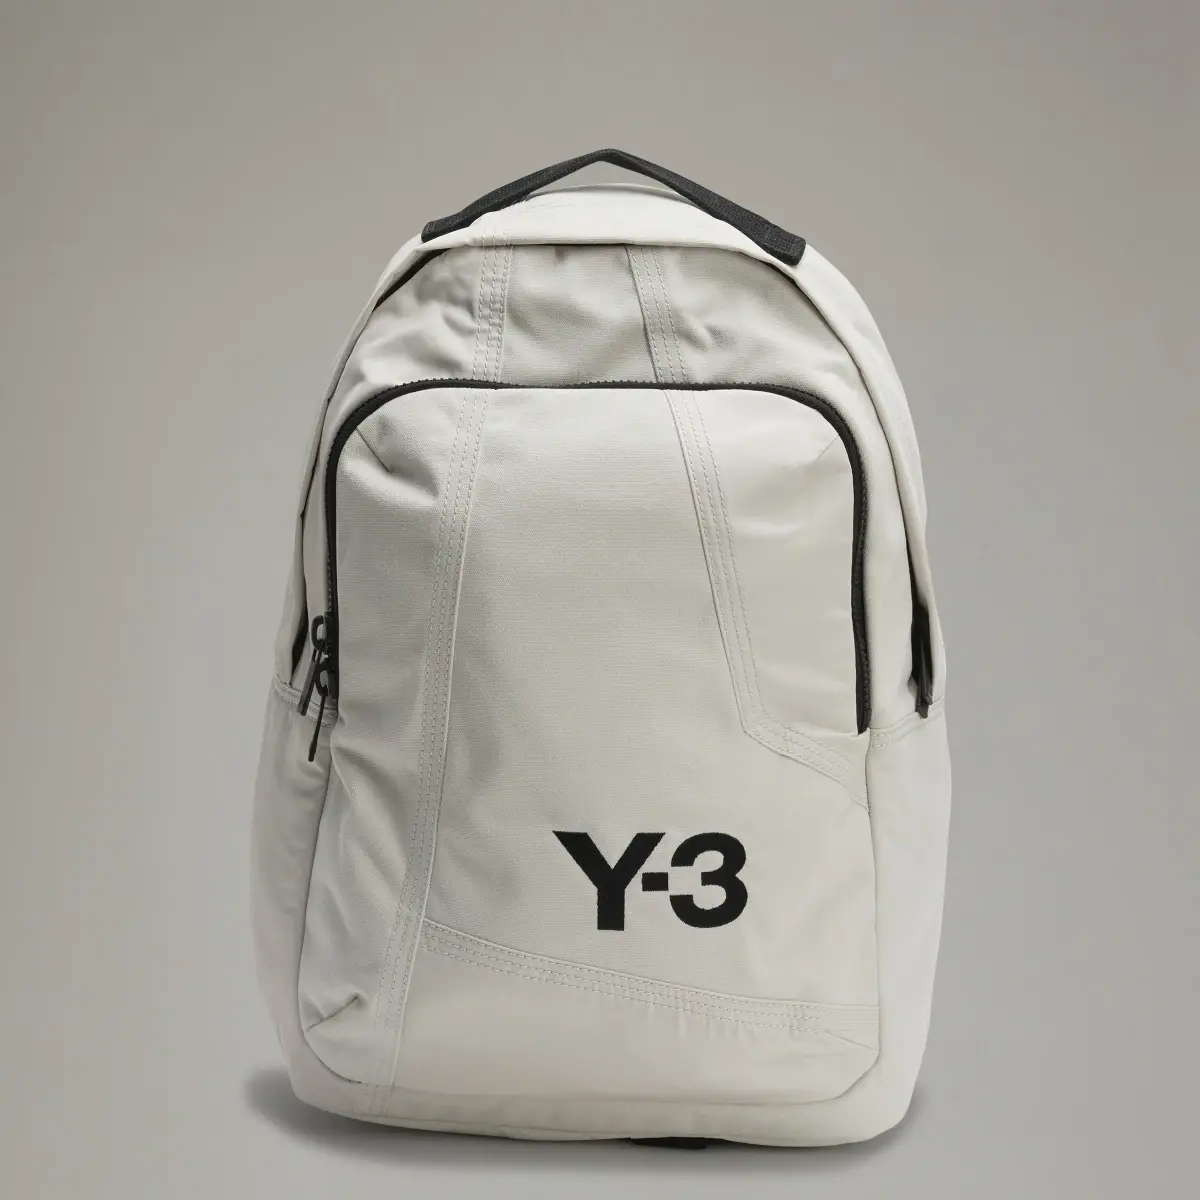 Adidas Y-3 Classic Backpack. 1